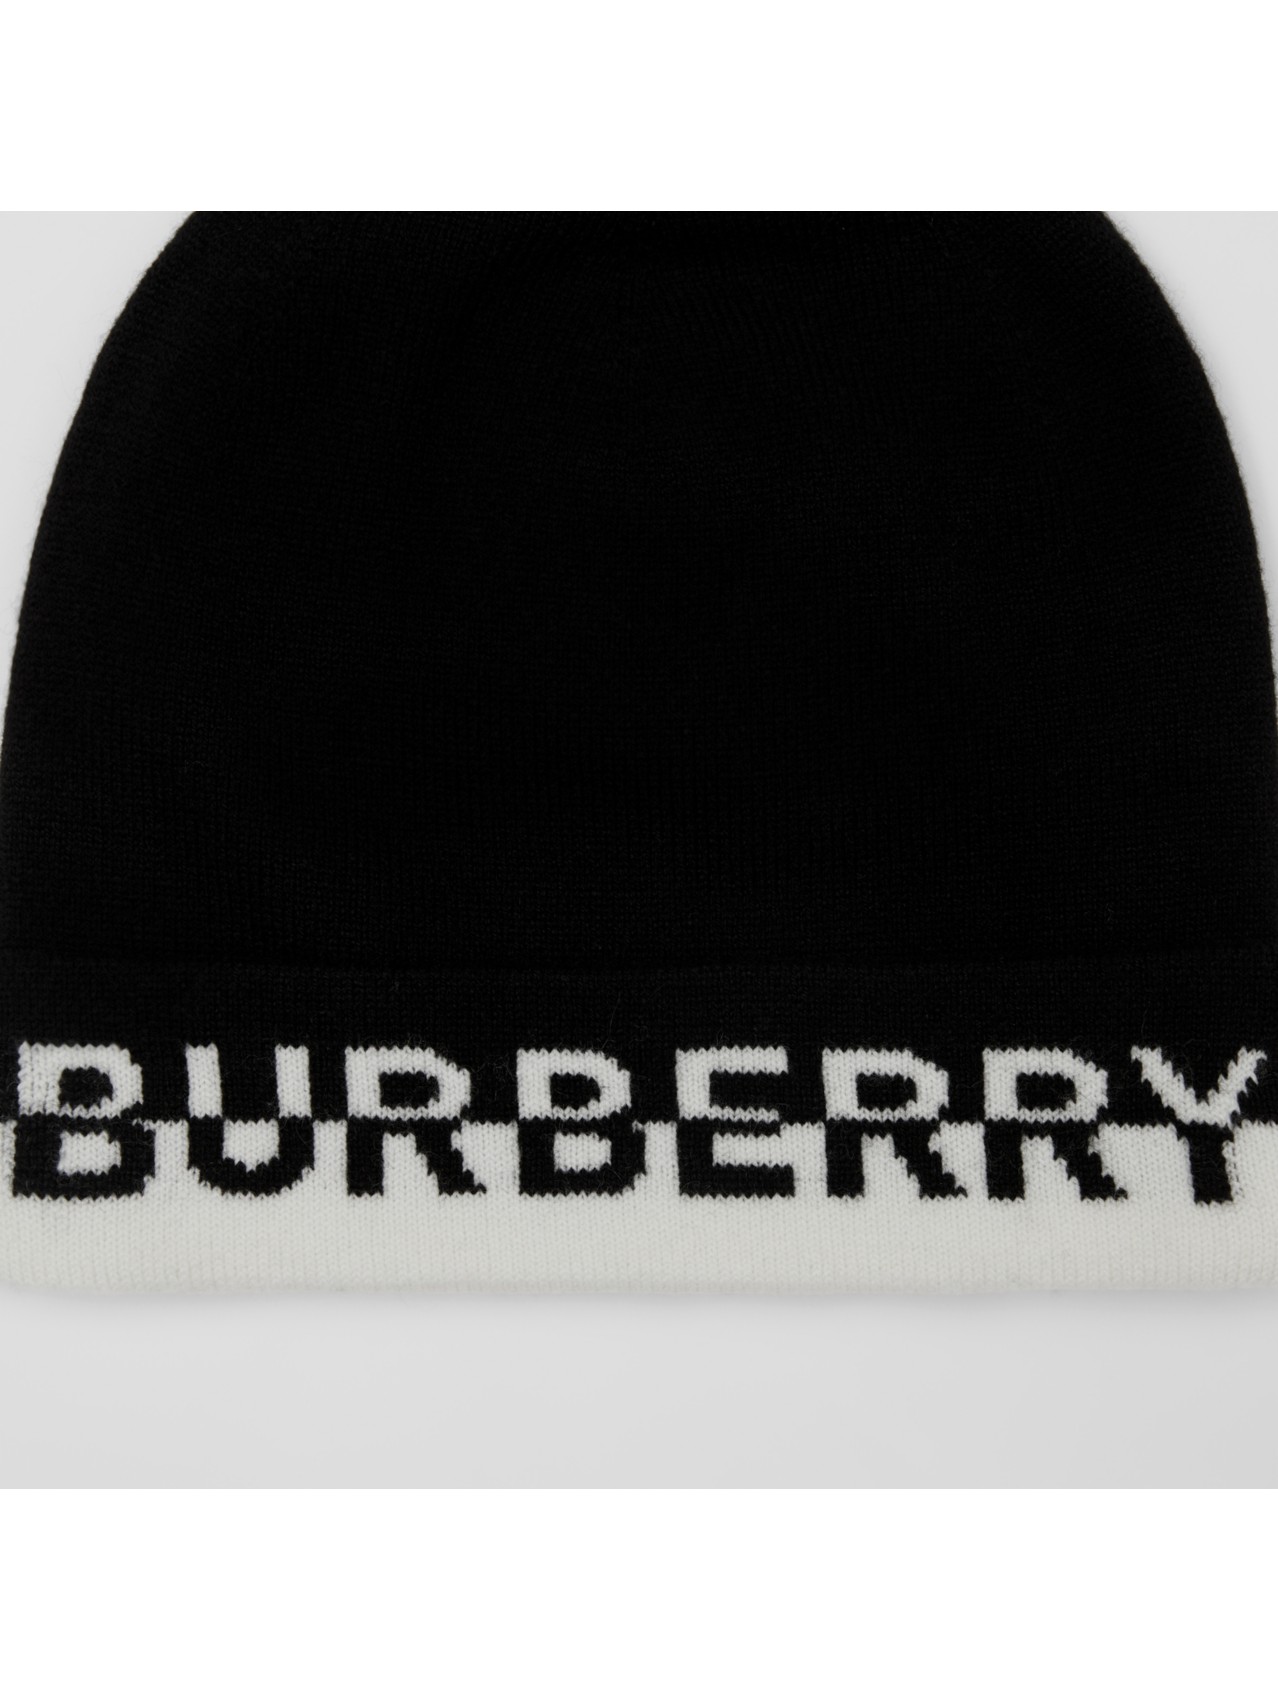 Women’s Designer Hats & Gloves | Burberry® Official